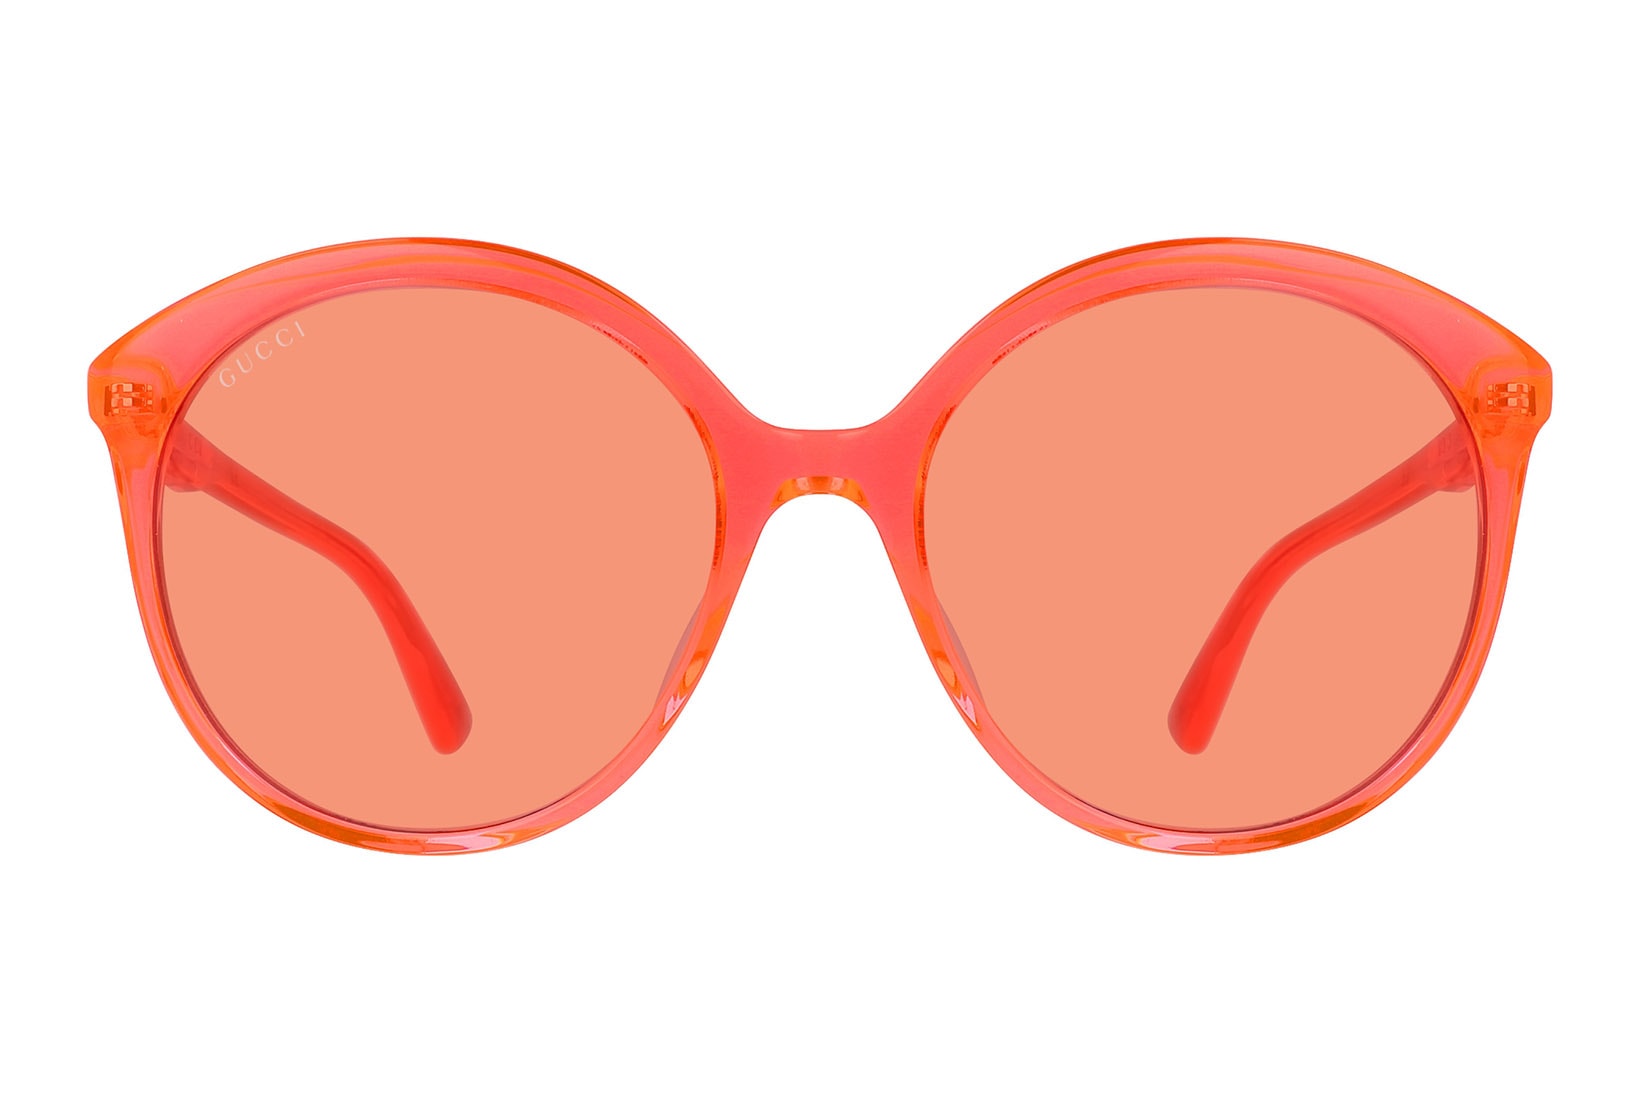 Gucci Monocolor Translucent Retro Sunglasses Vibrant '80s Pink Blue Oversized Where to Buy